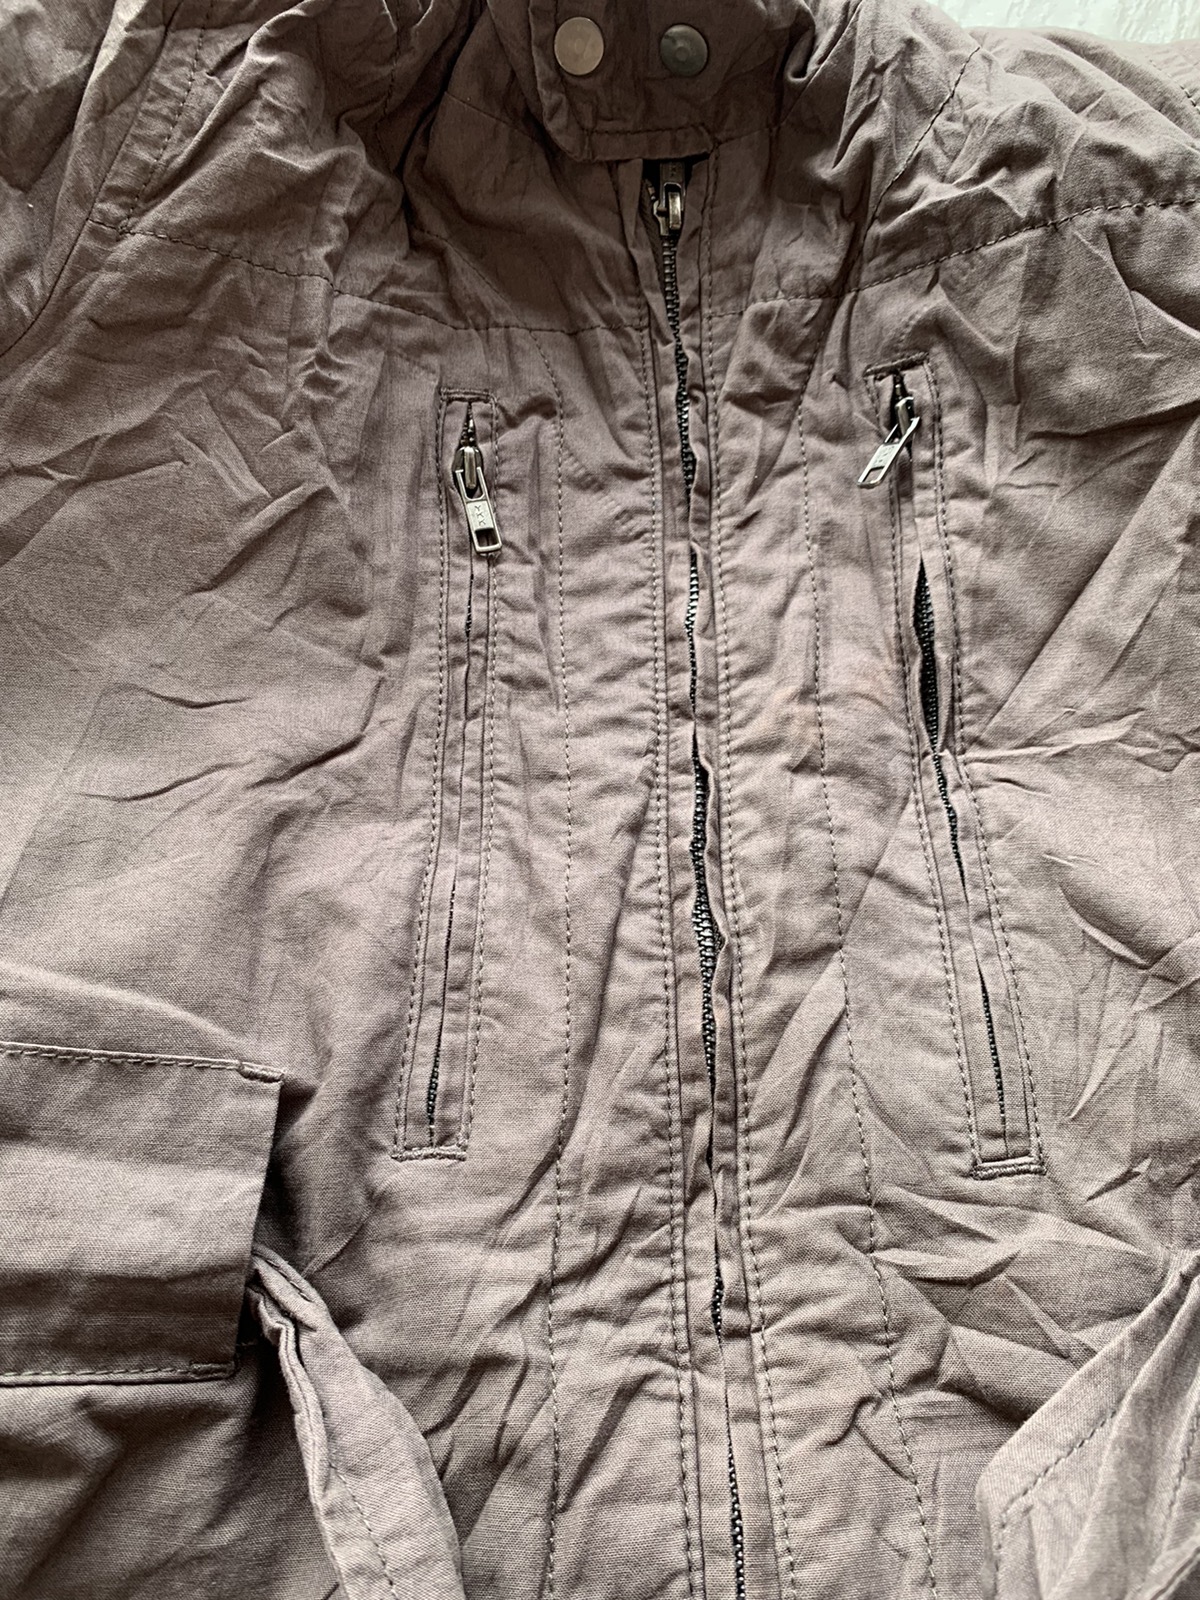 Diesel jackets full zipper nice design - 4